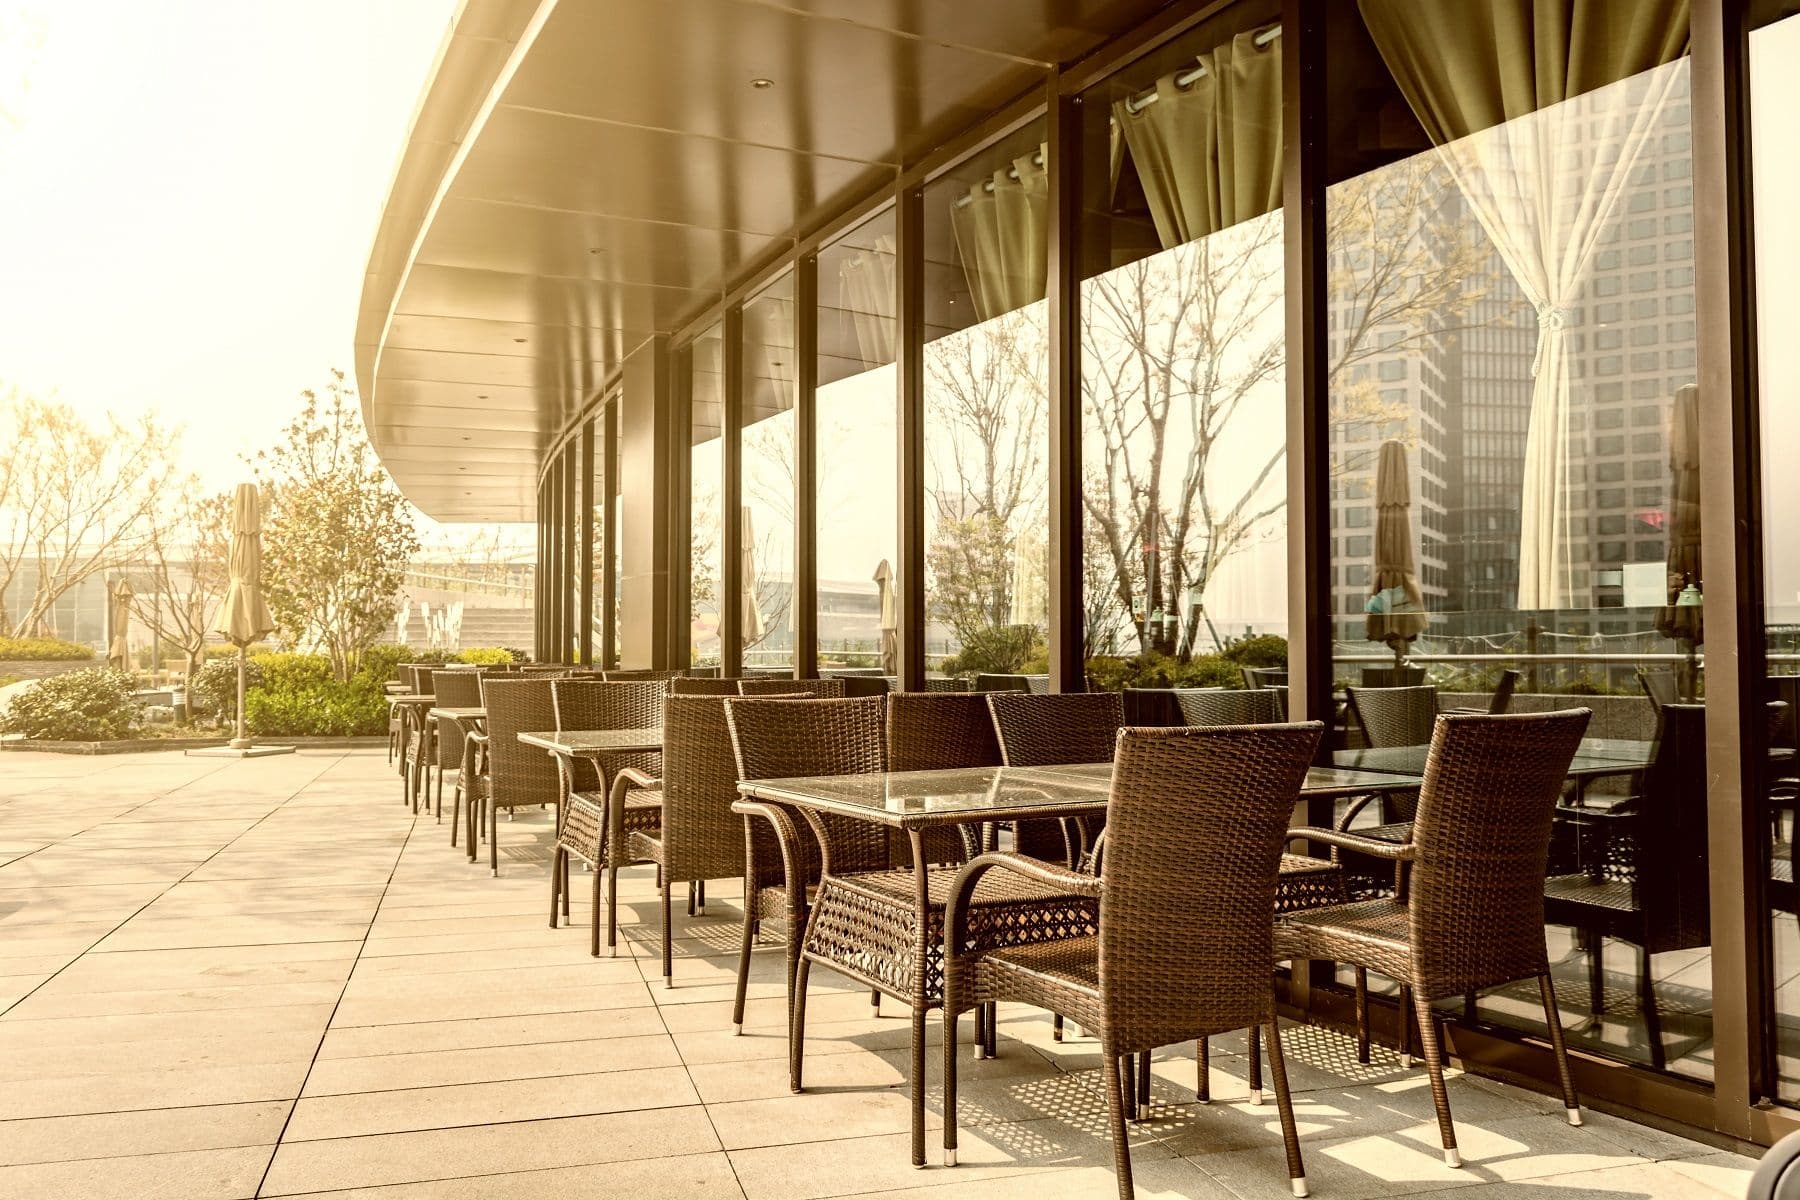 Restaurant business loan - Restaurant outdoor view